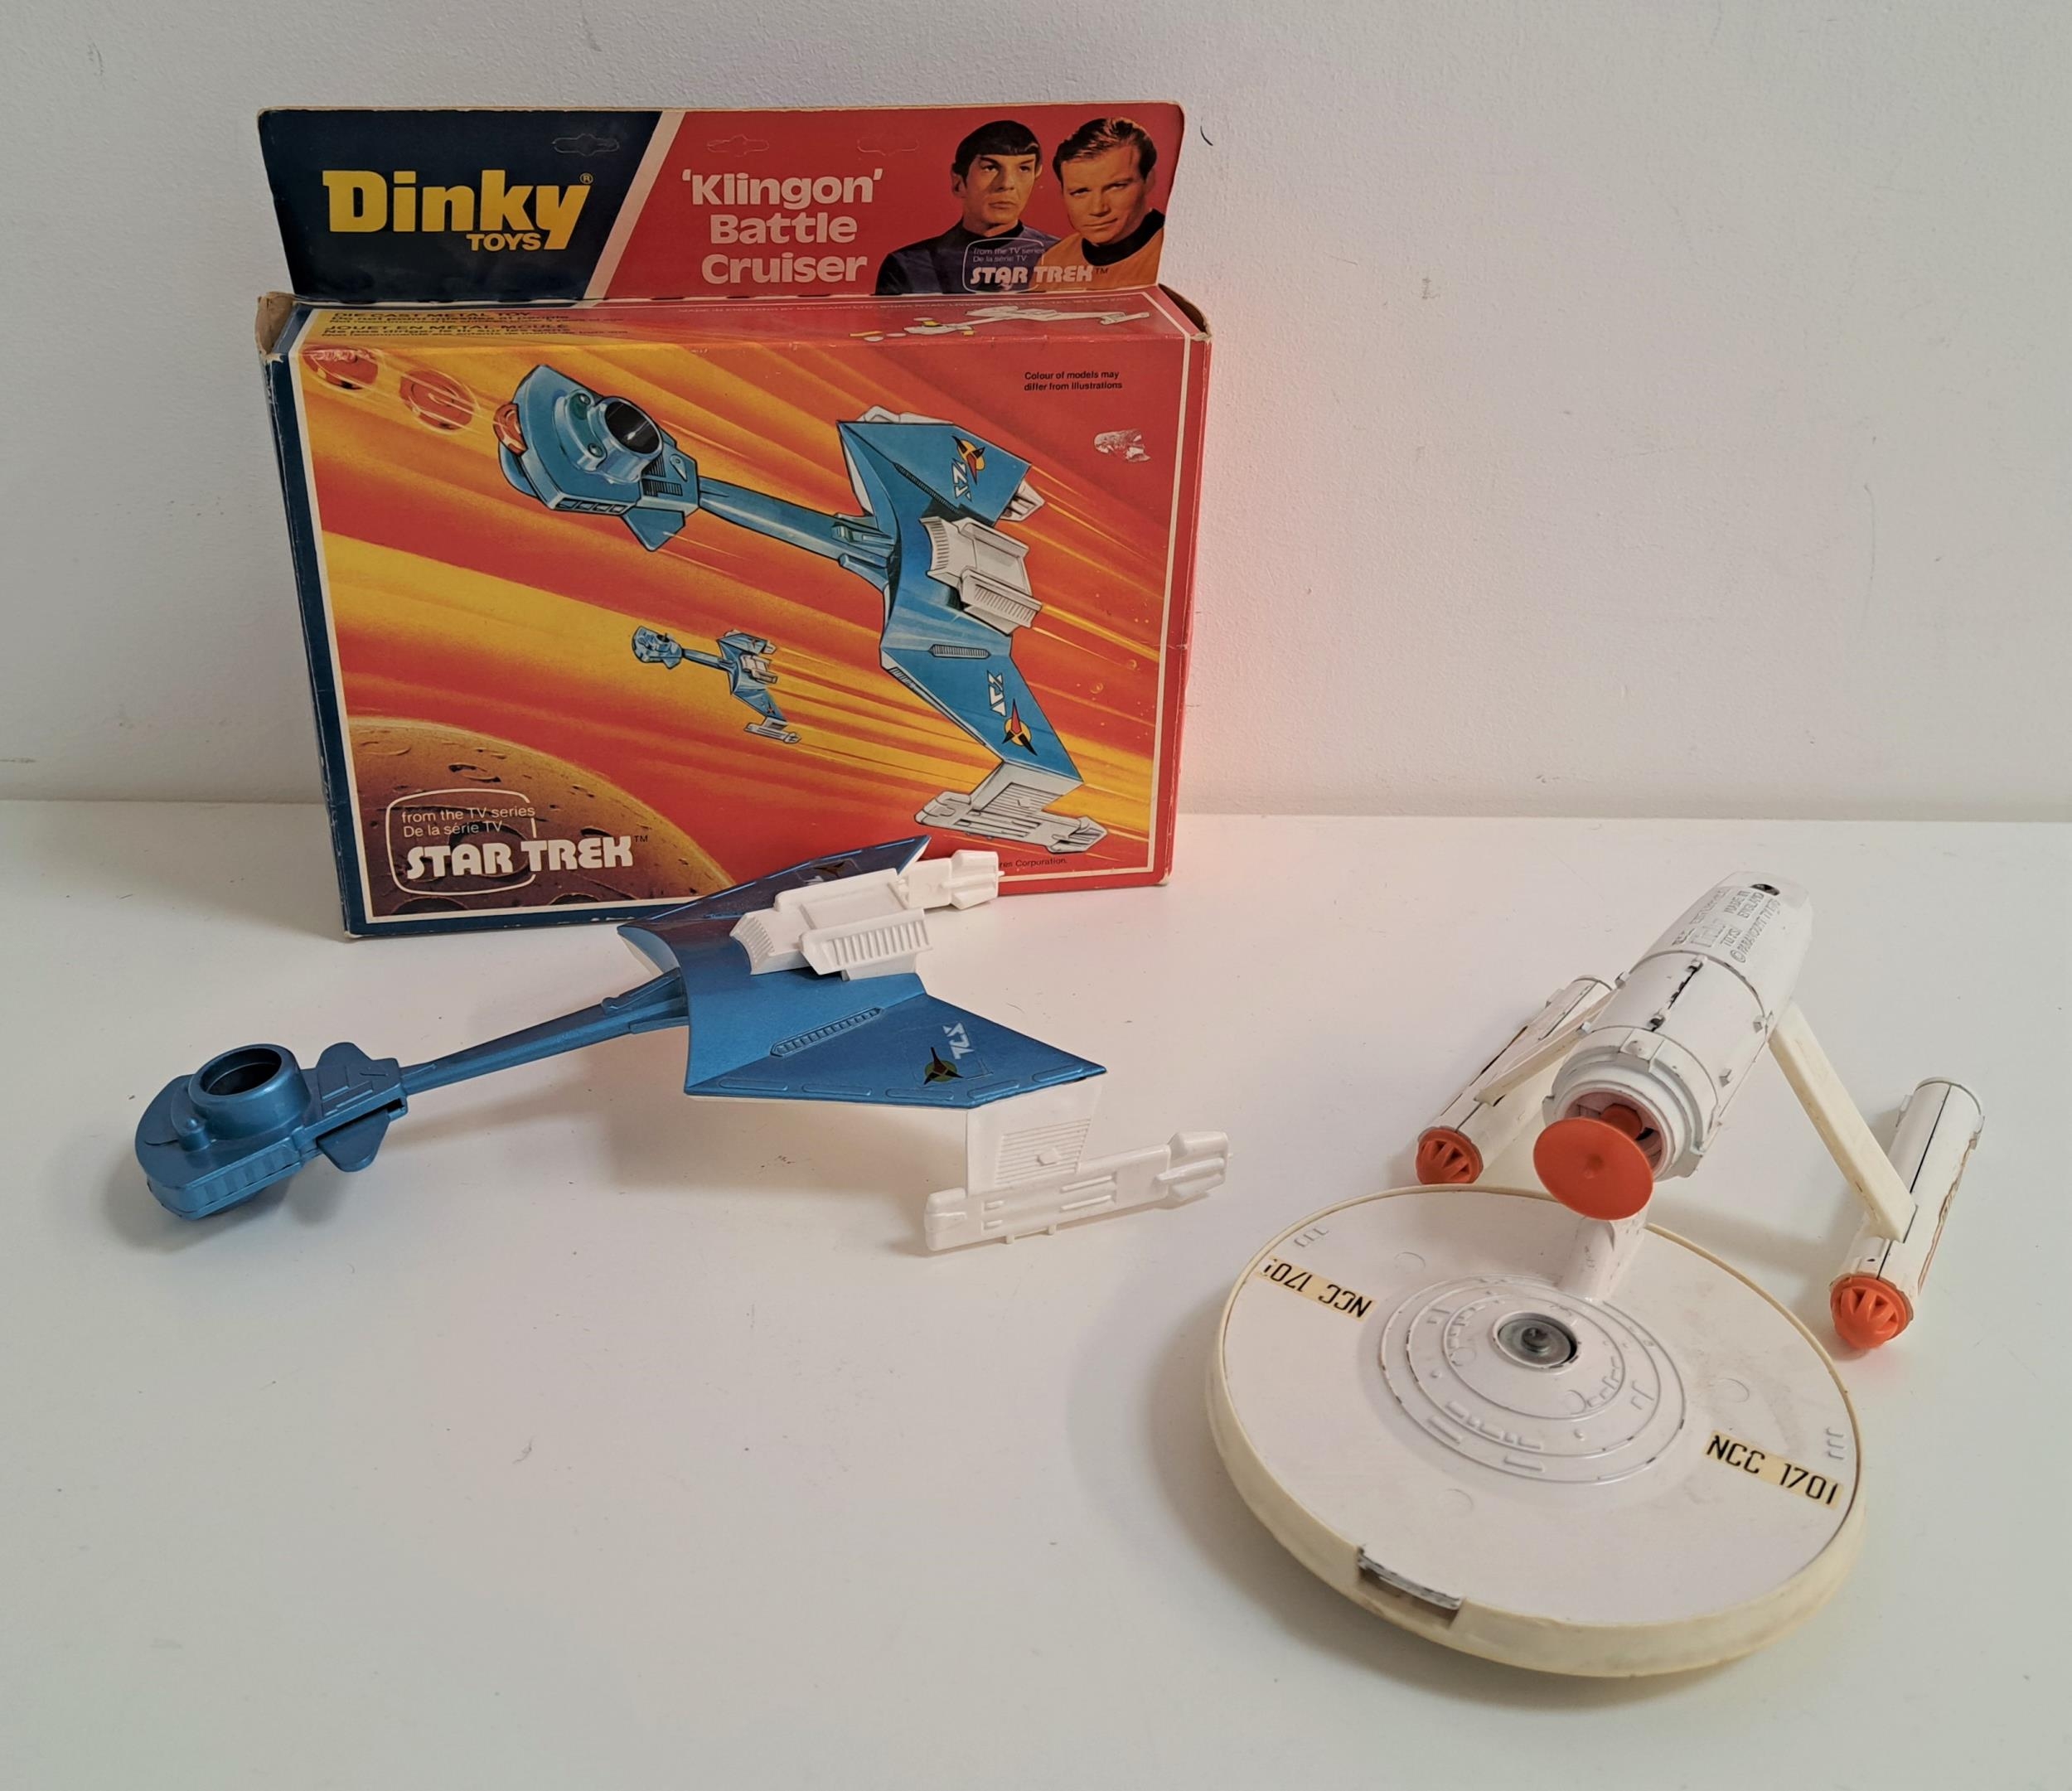 DINKY DIE CAST KLINGON BATTLE CRUISER from the television show Star Trek, in original box,